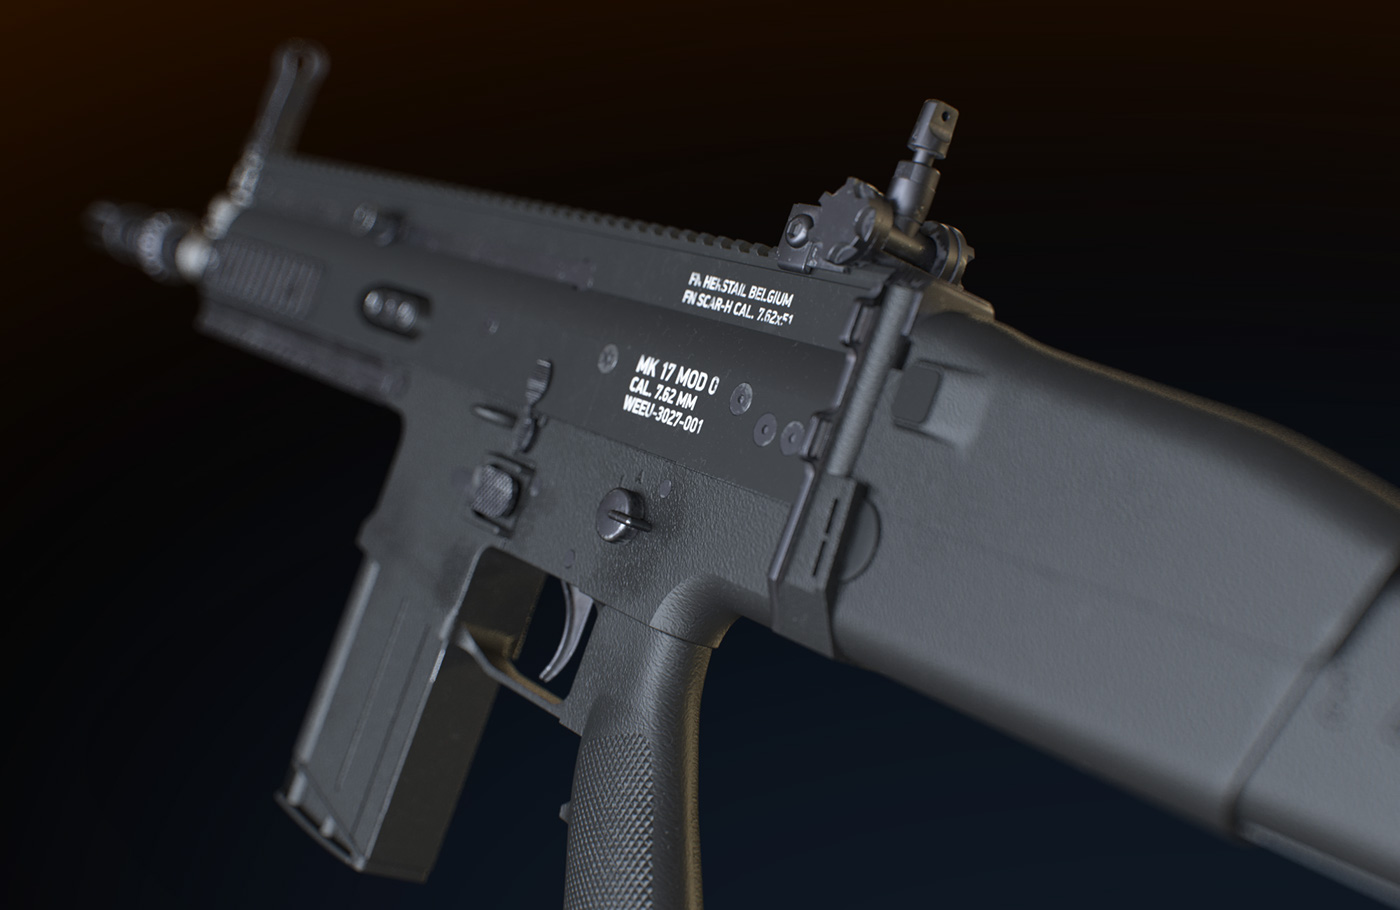 fusion 360 octane cinema 4d Substance Painter modeling texturing rifle Gun SCARE-H